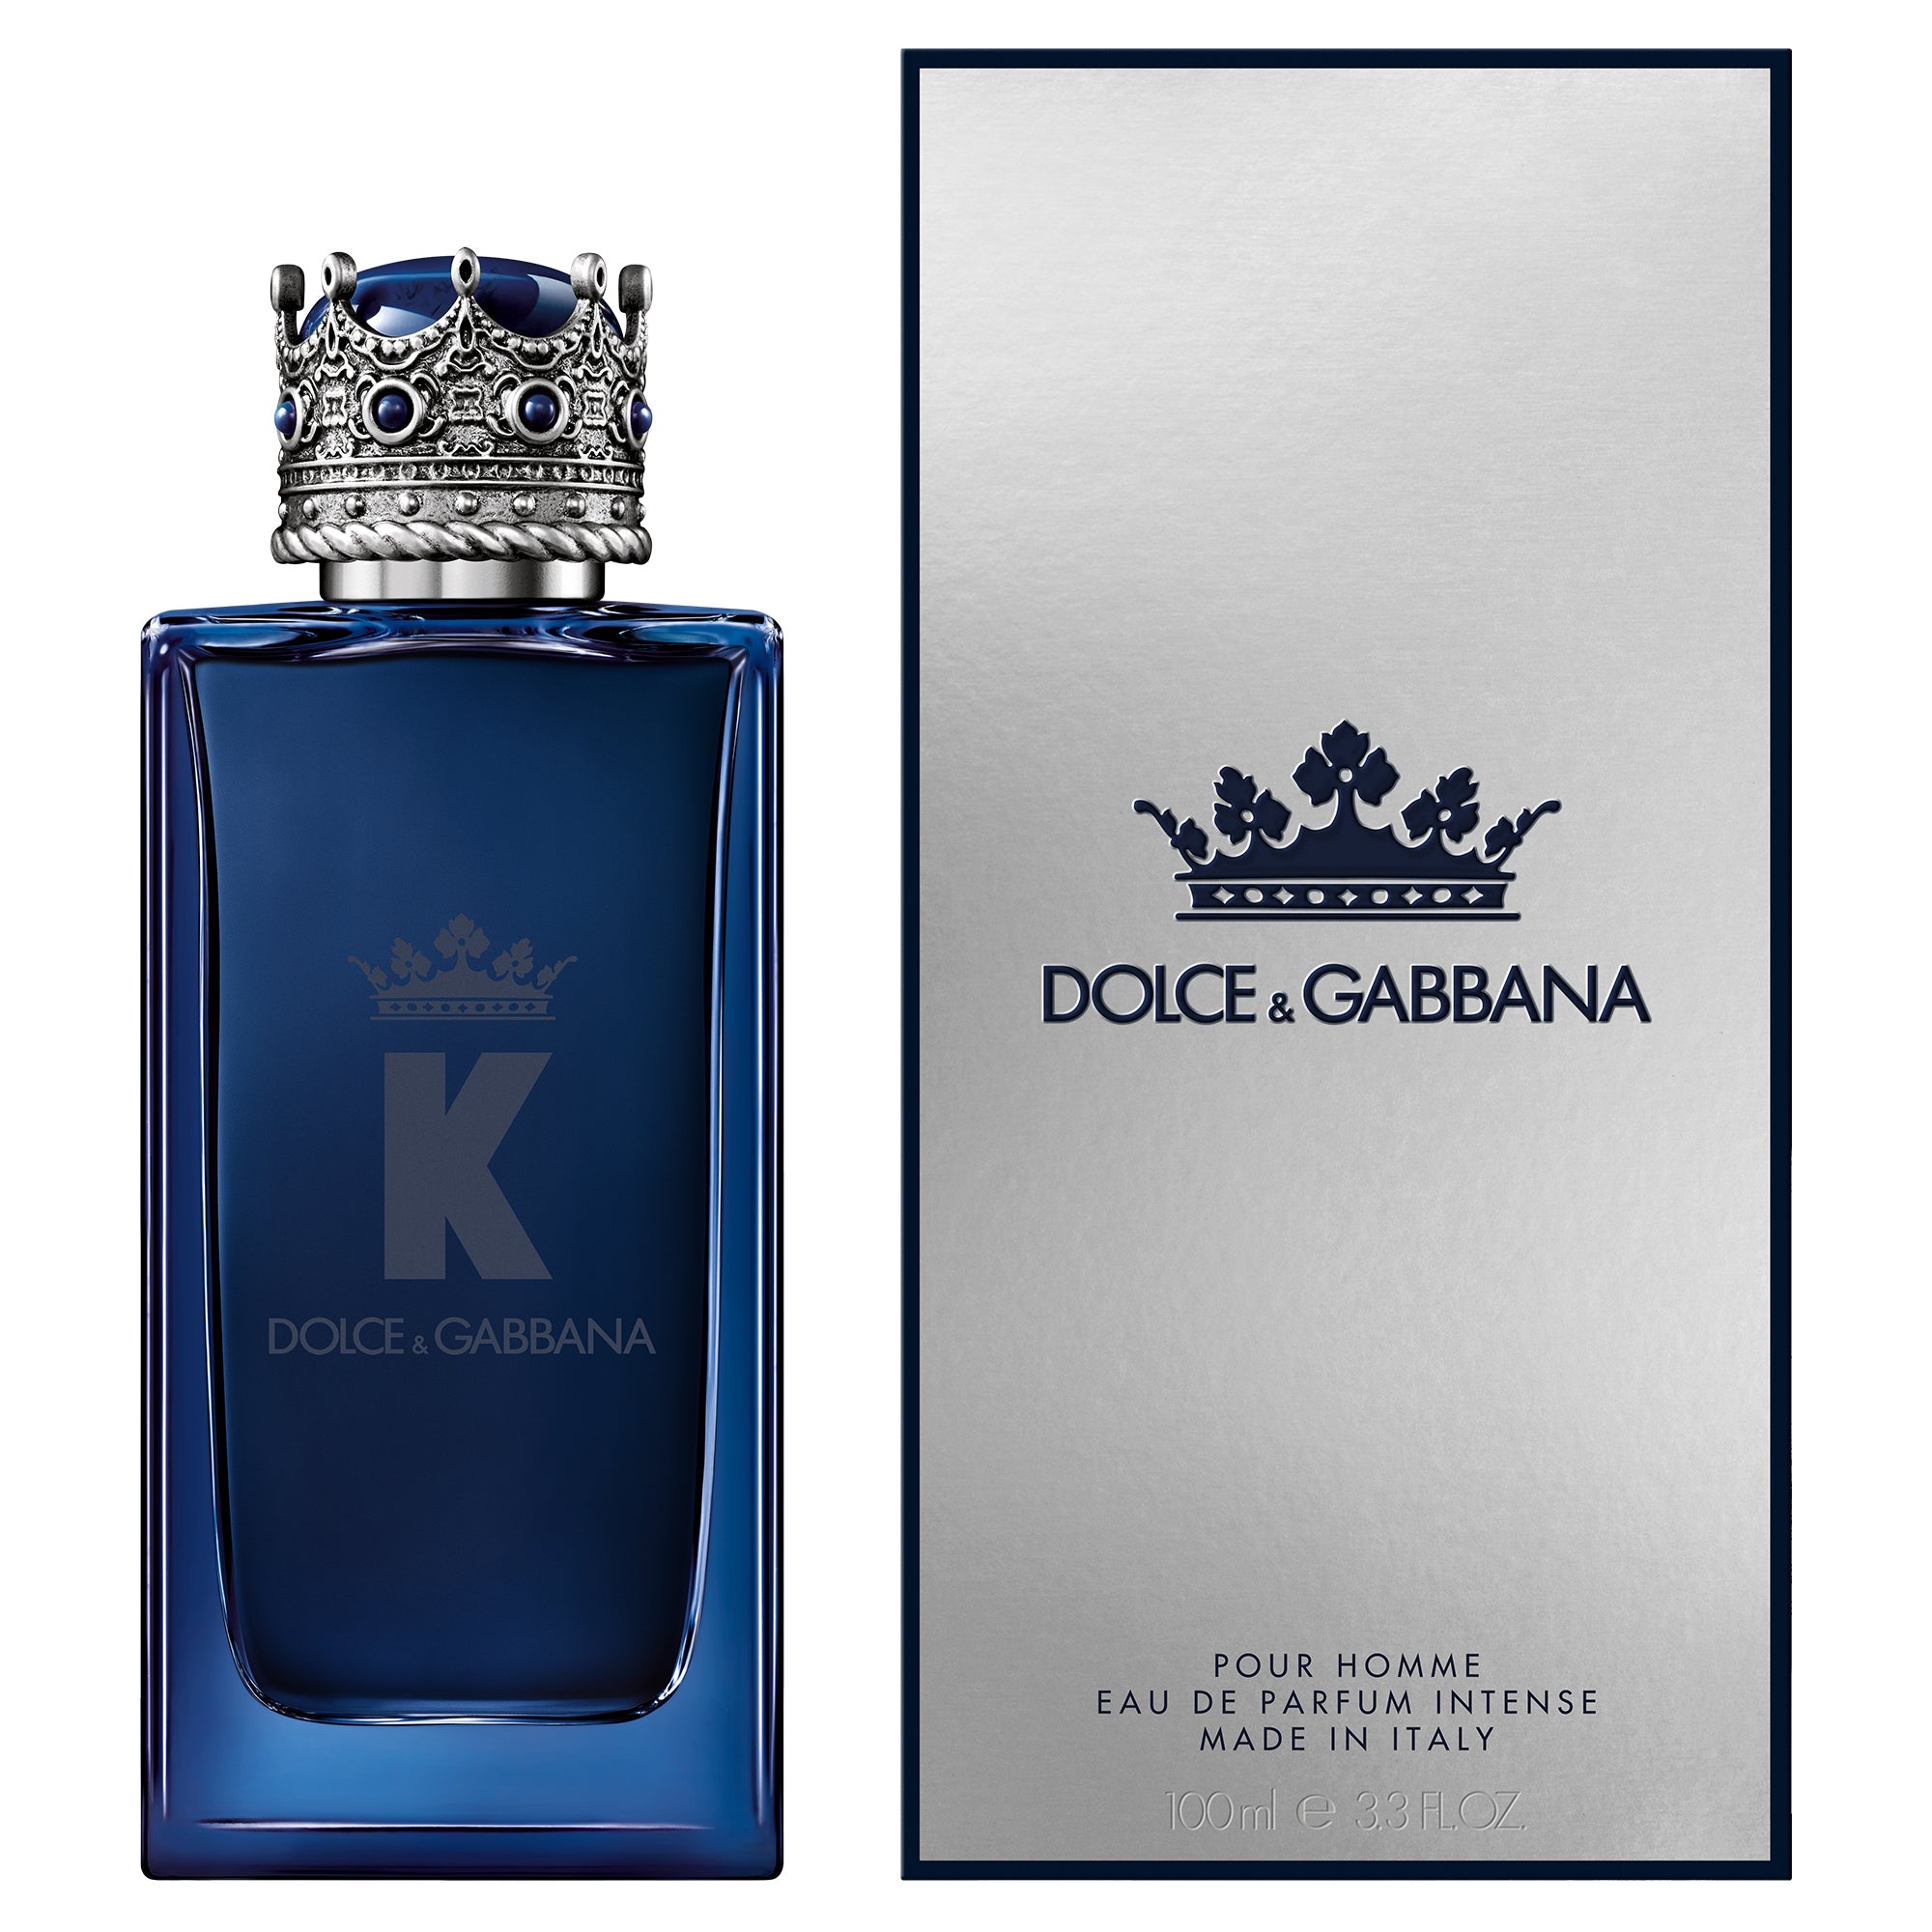 K by Dolce&Gabbana EDP Intense